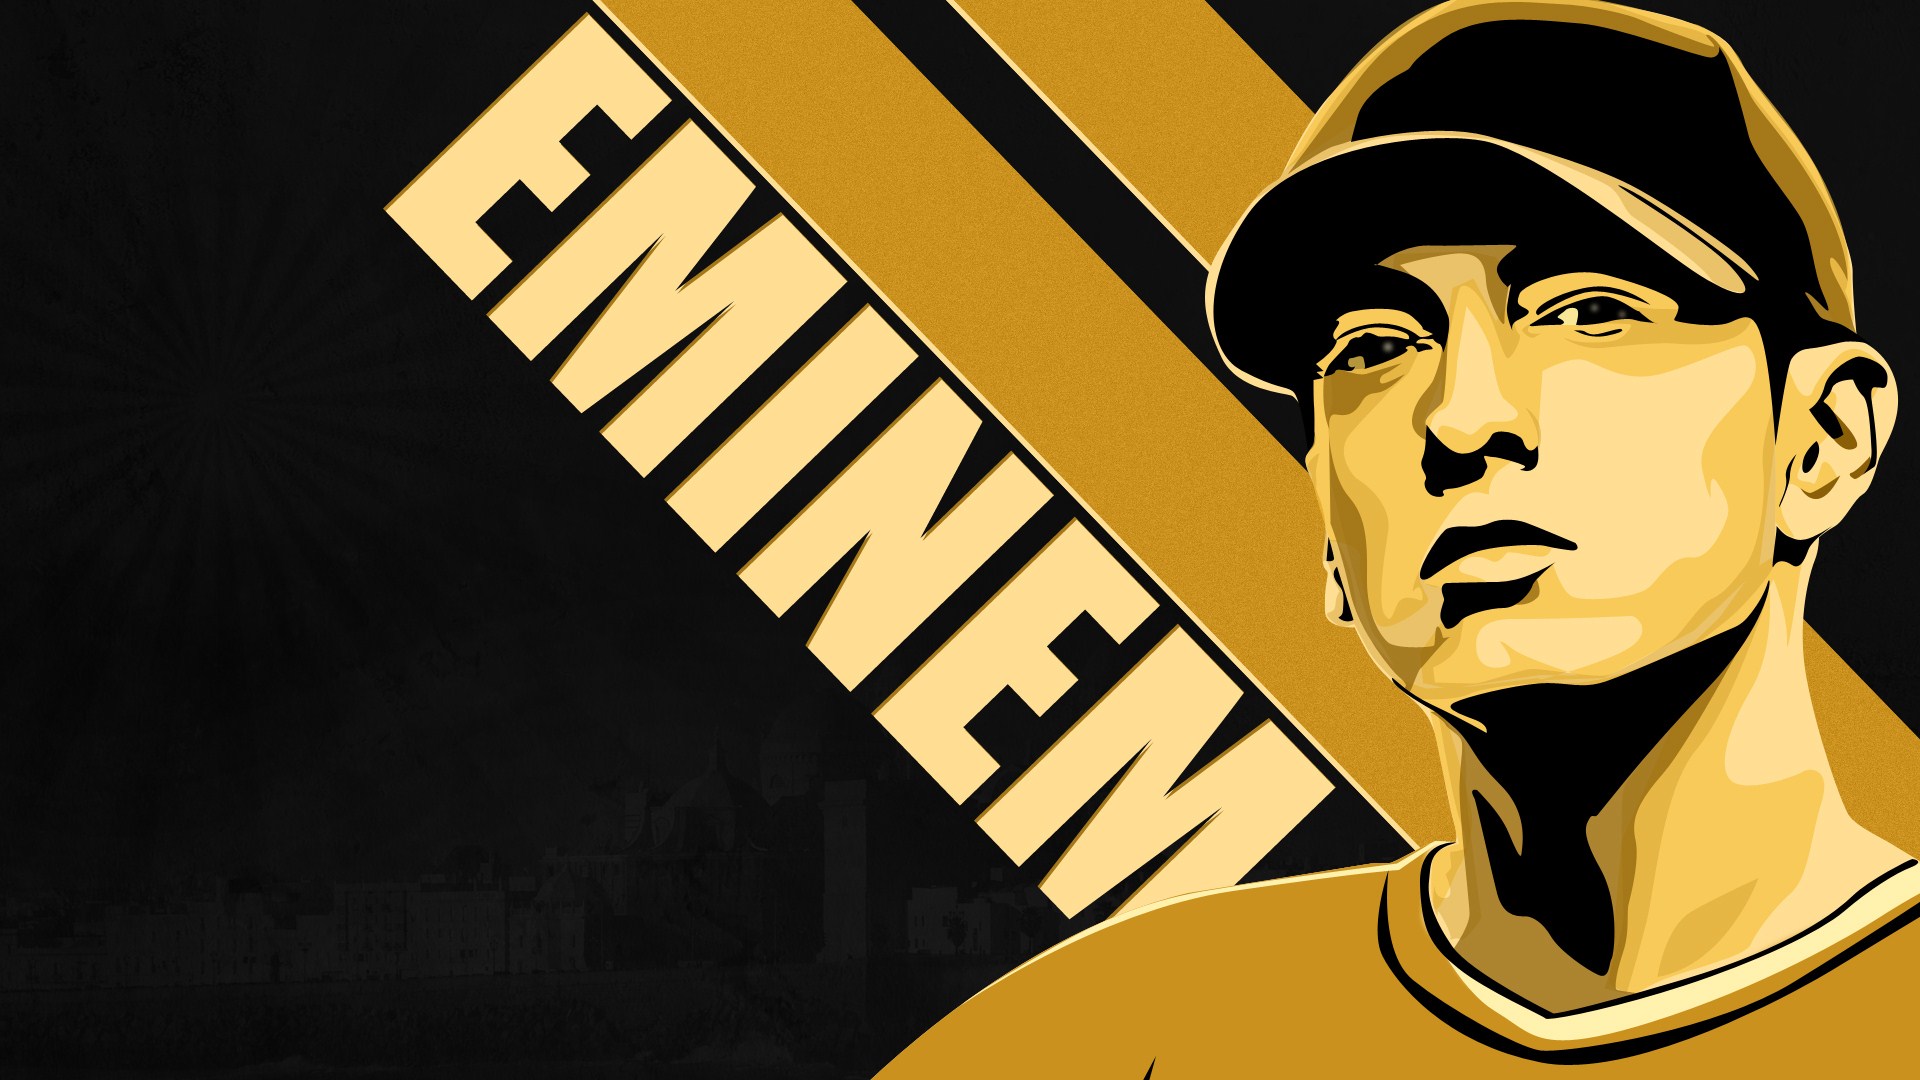 Eminem Cartooon Rap Wallpaper